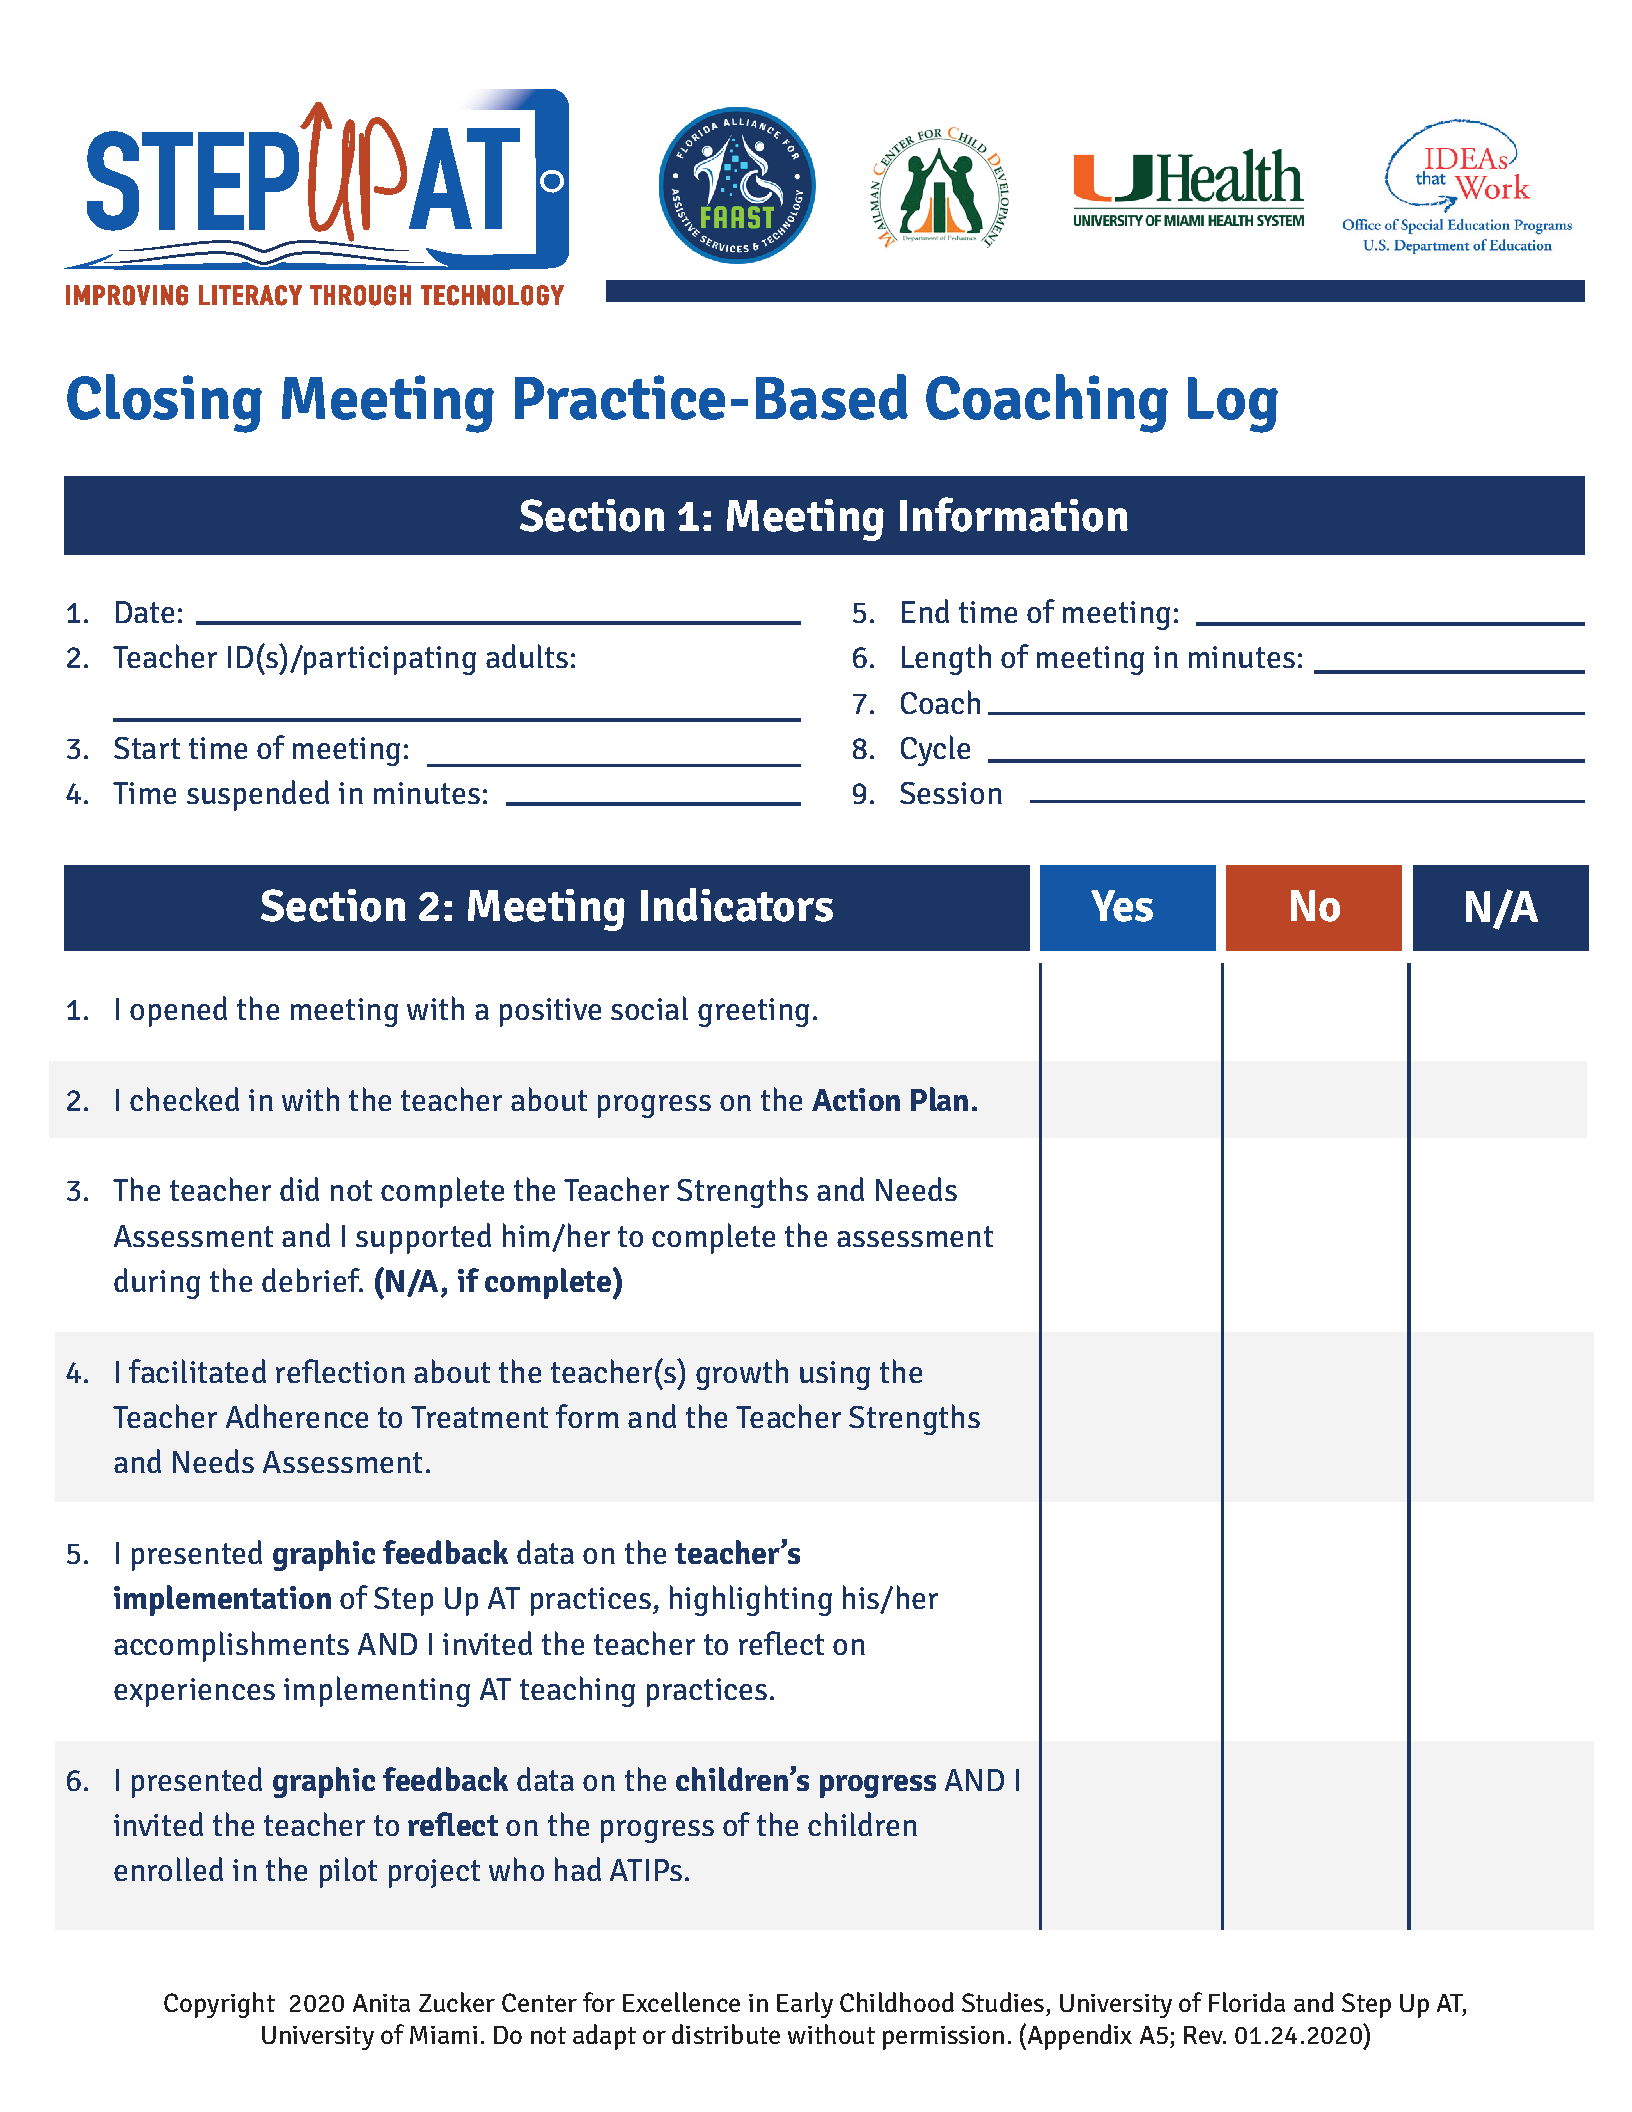 Step Up AT Closing Guide (Closing Meeting Practice-Based Coaching Log)